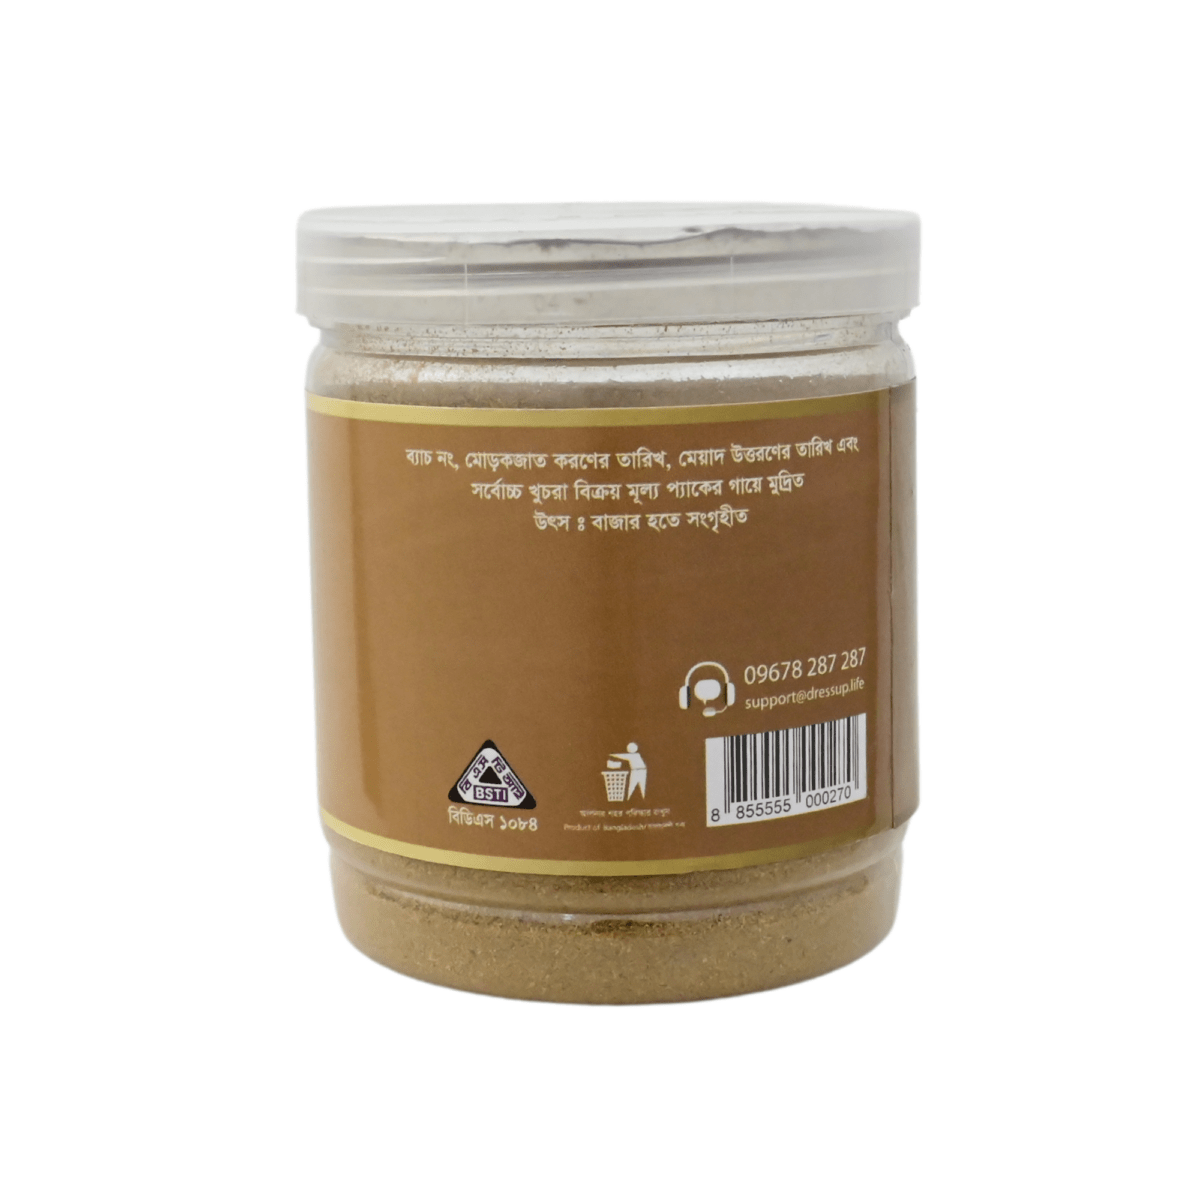 yummy turmeric powder হলুদ গুঁড়া (400gm)